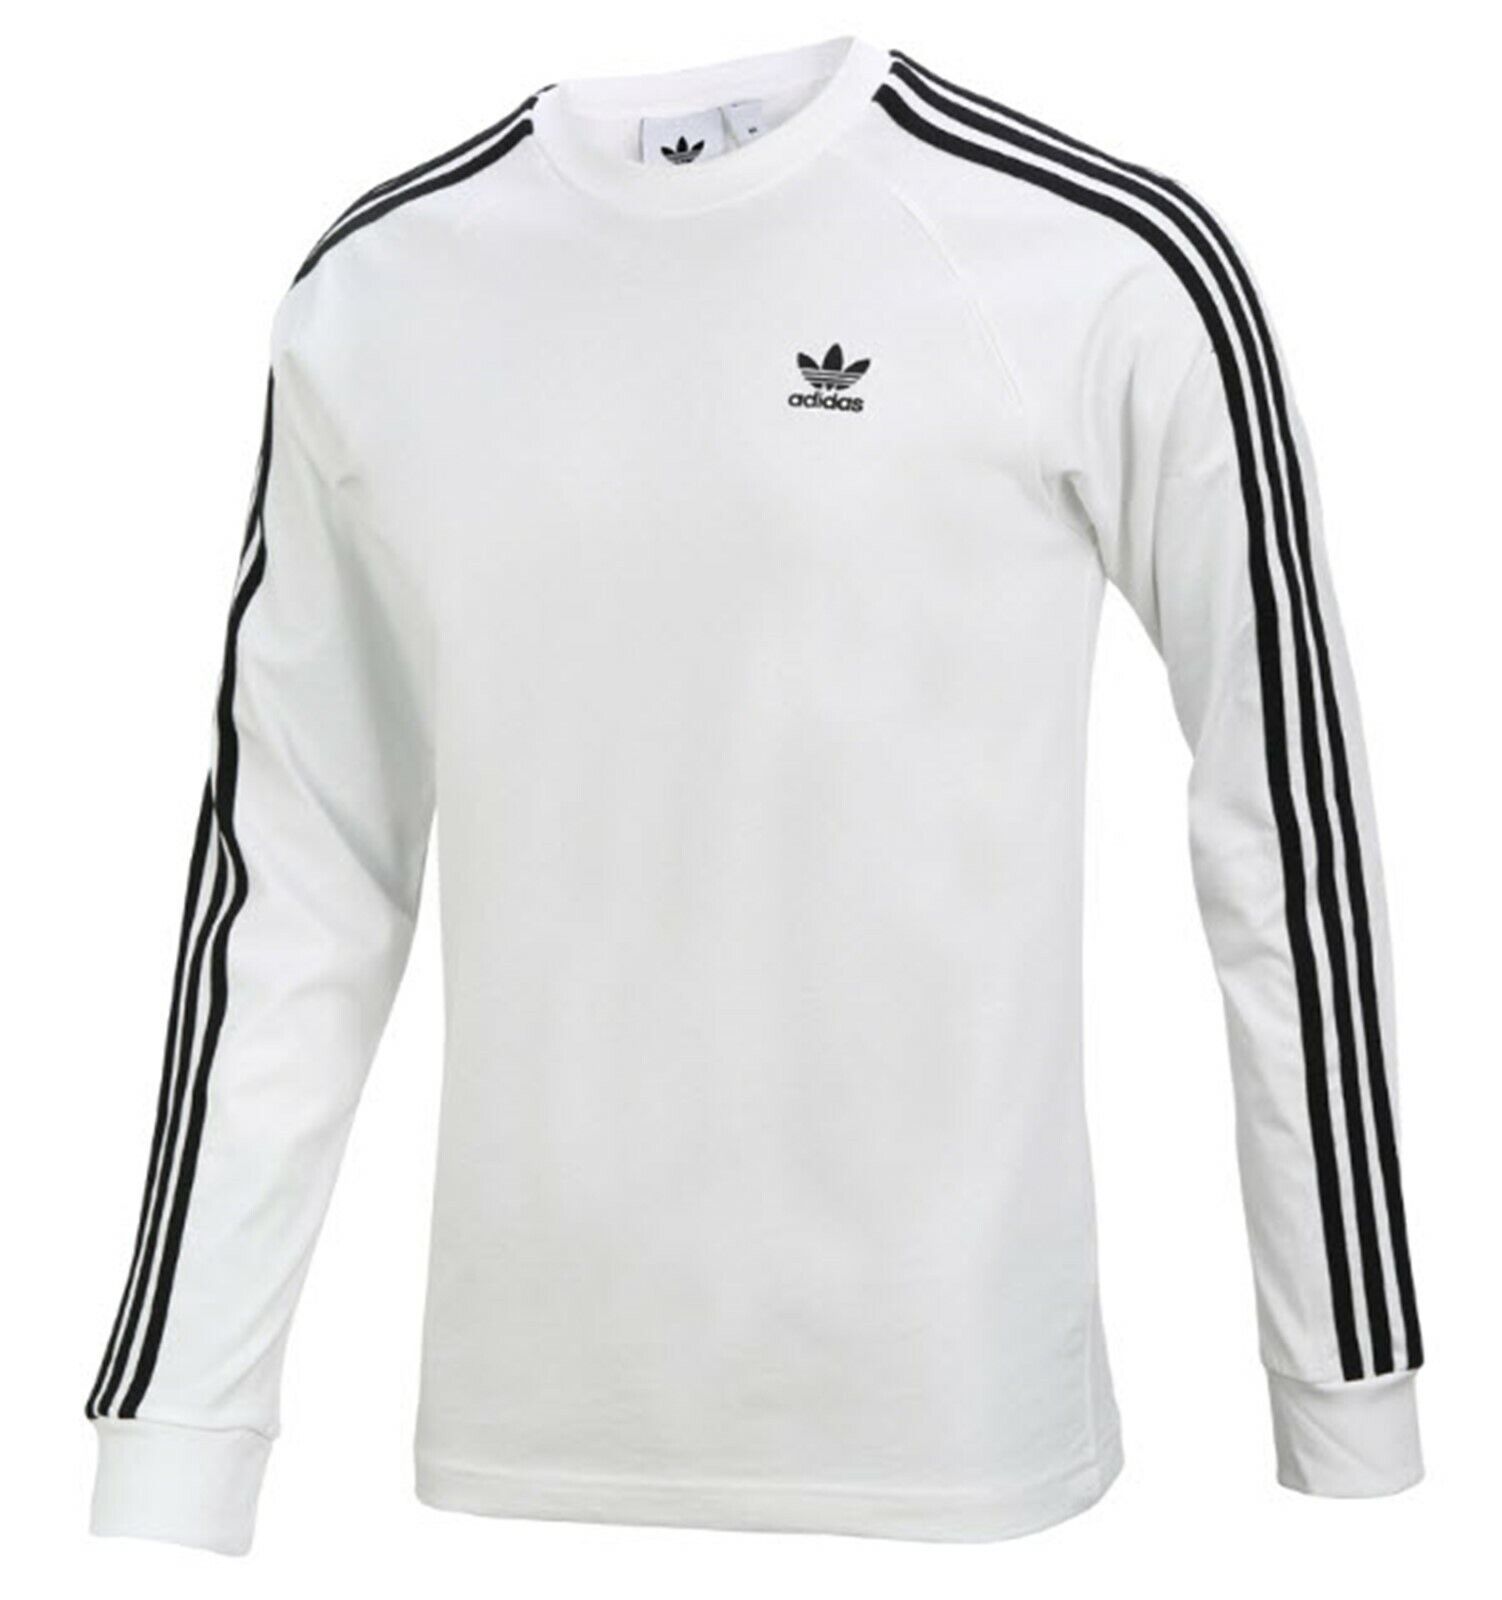 Adidas Men 3S Shirts White Running Jersey Casual Shirt ED5959 | eBay